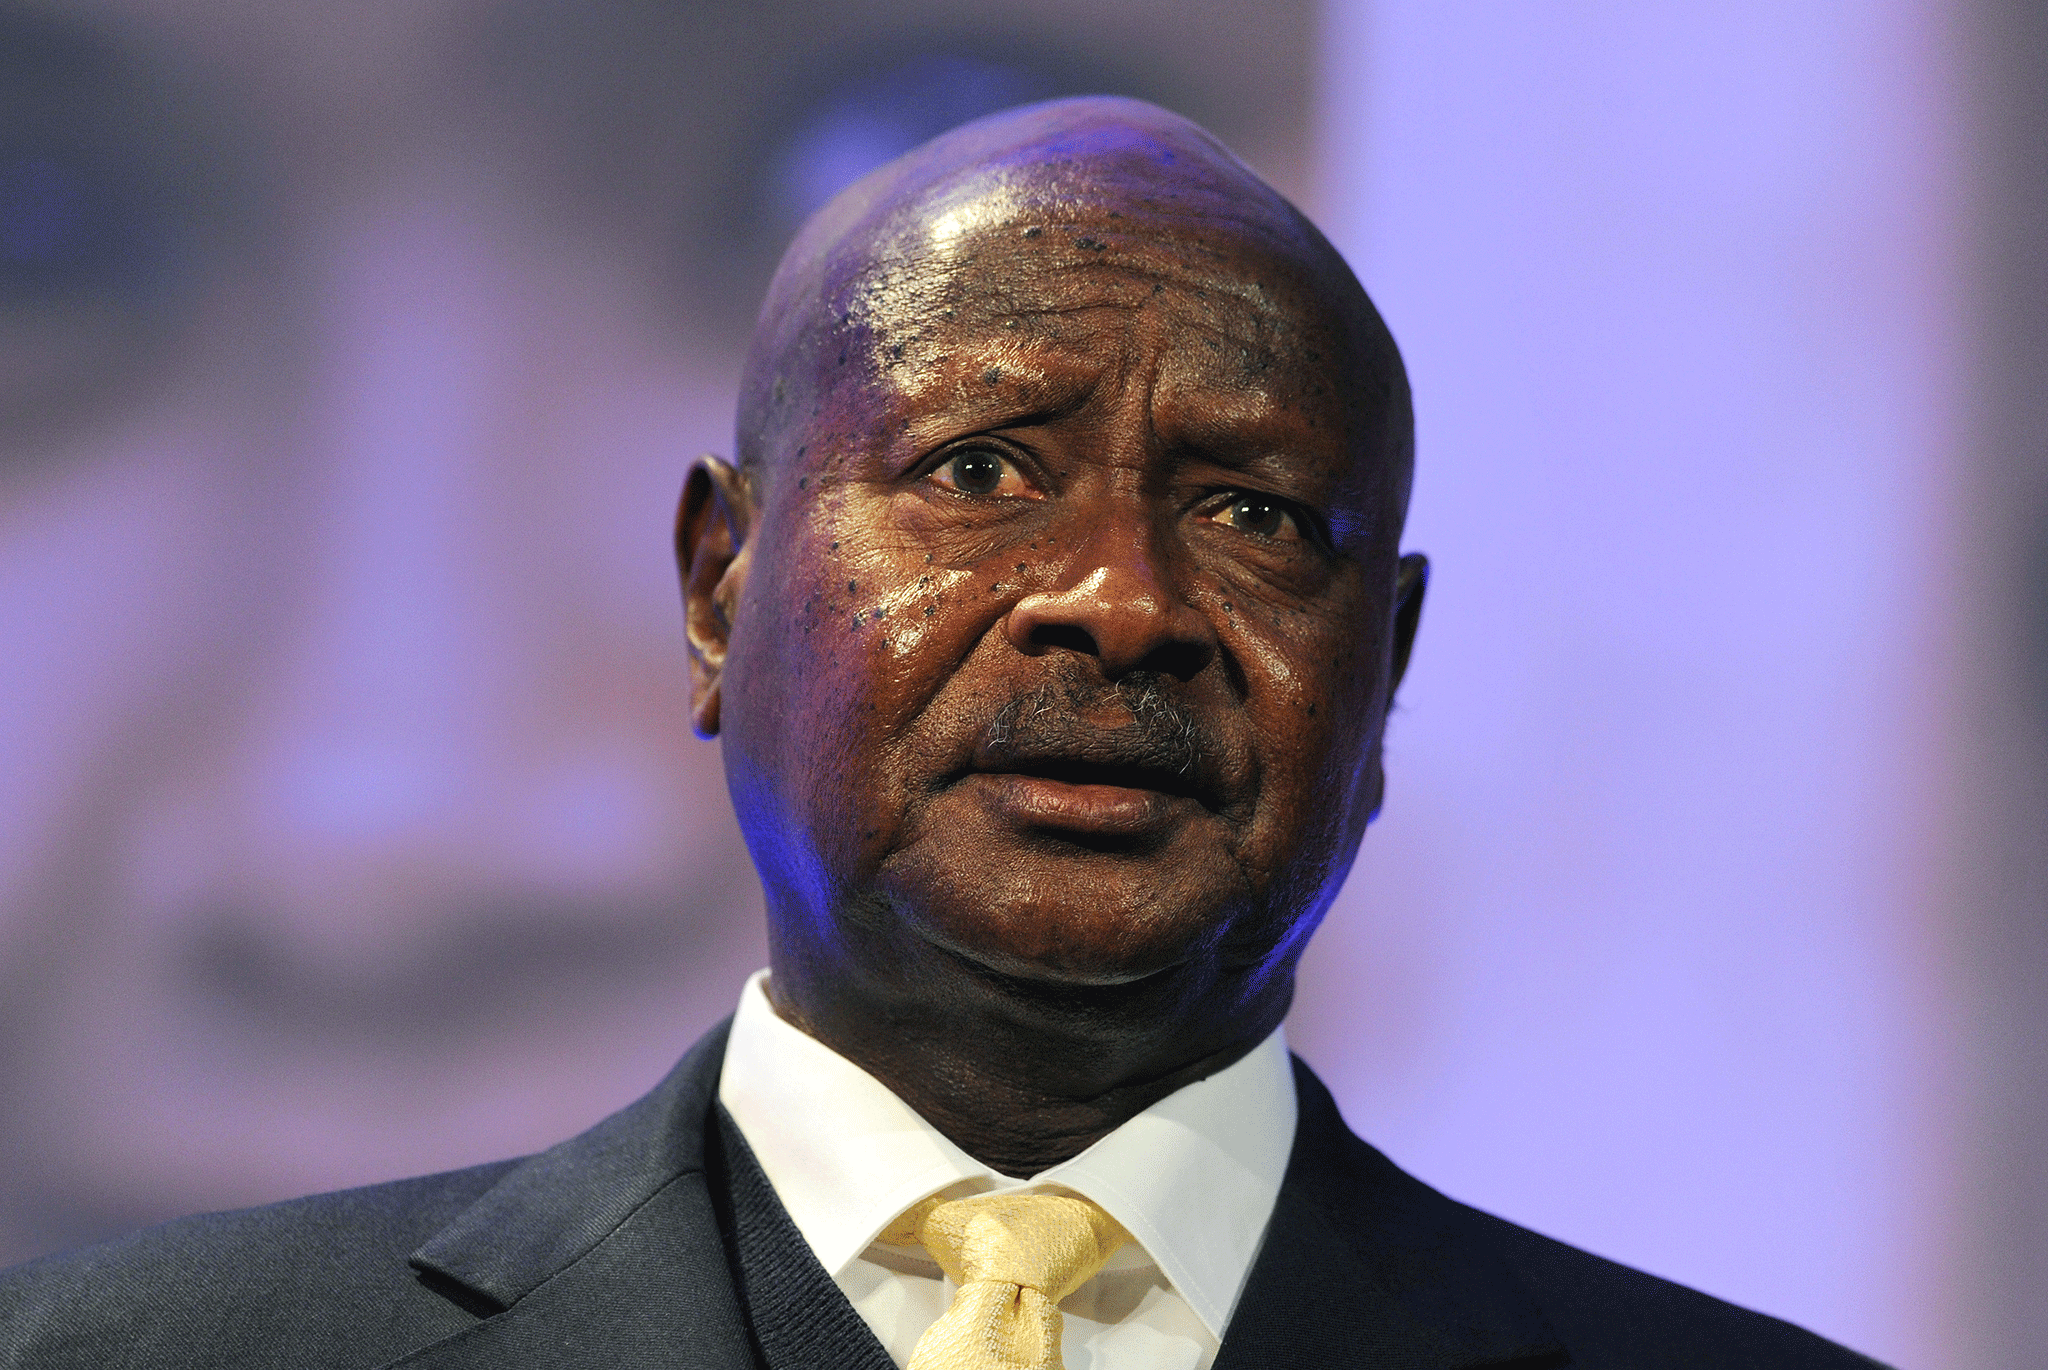 Museveni has been President of Uganda since 1986 